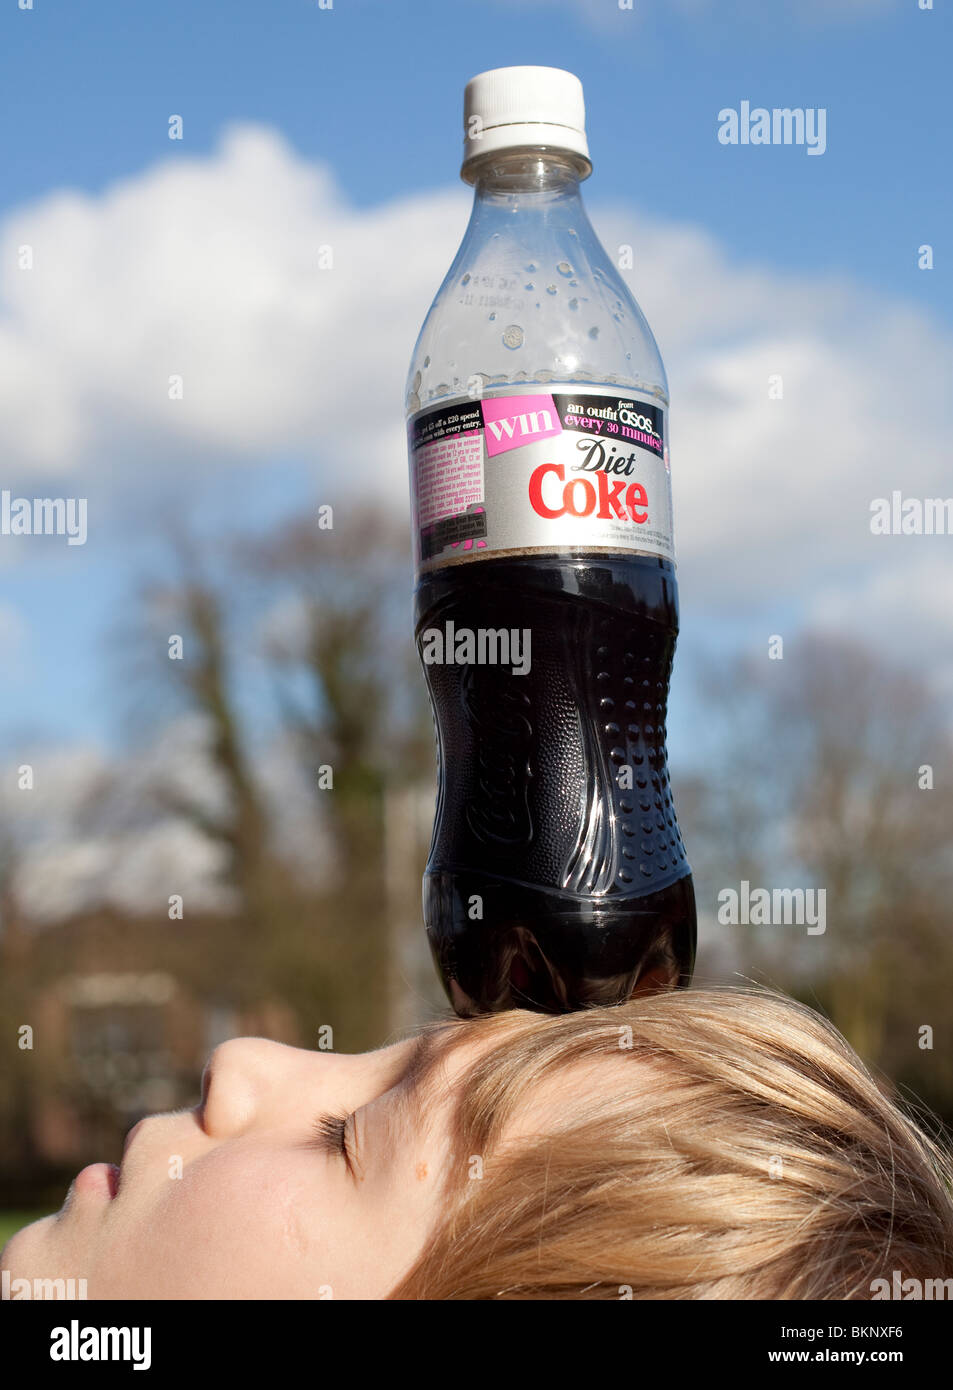 Boy balancing Coke bottle on head. Stock Photo